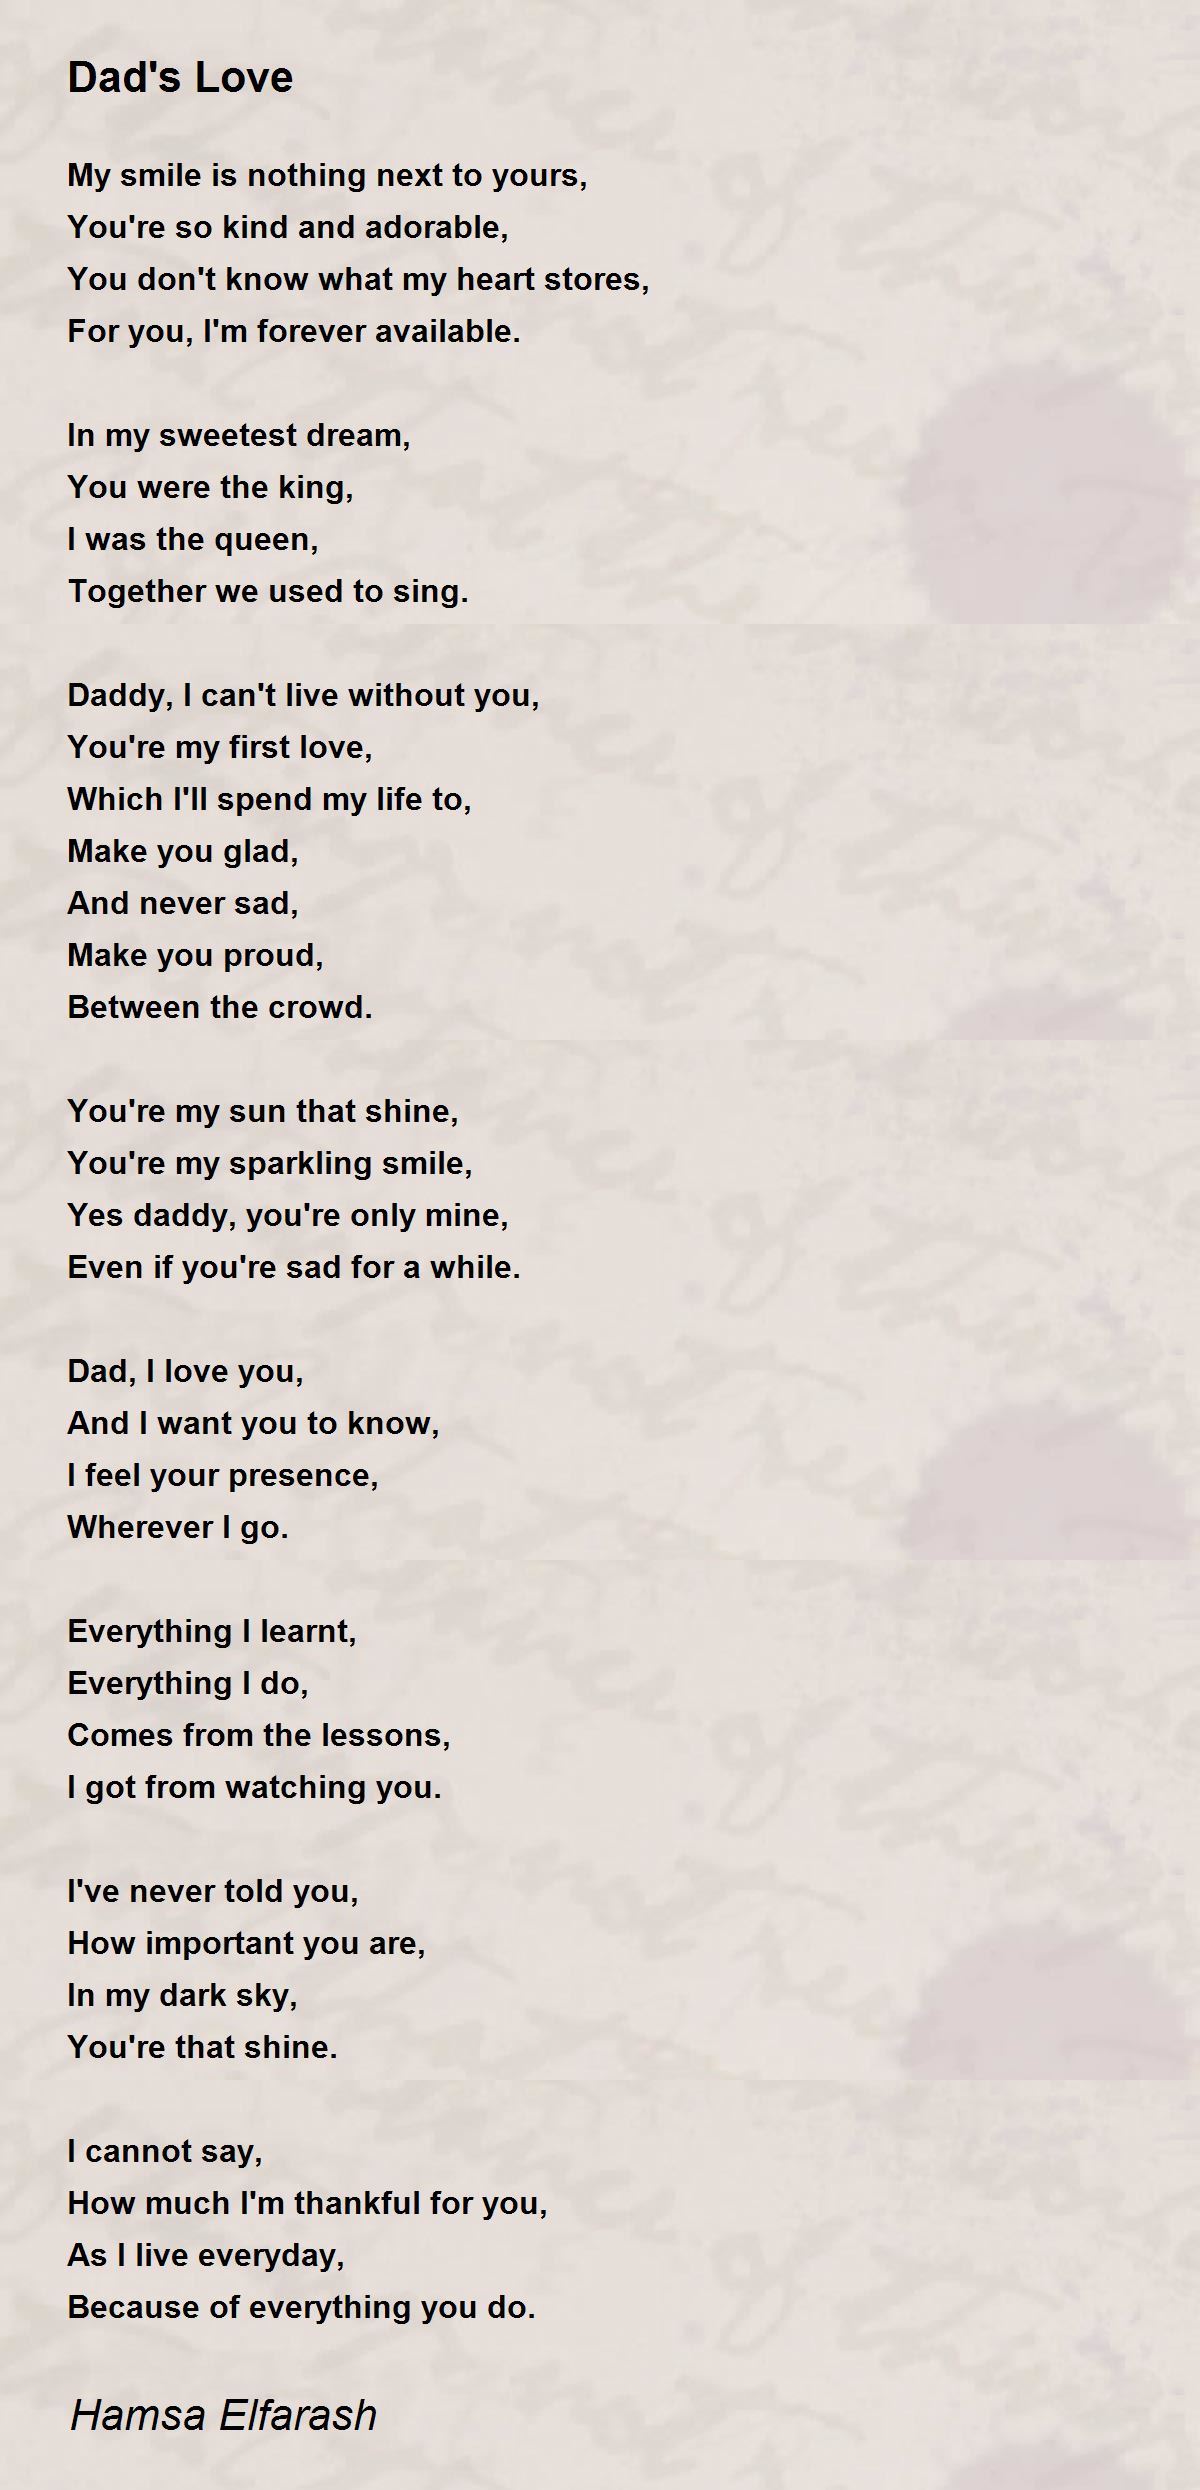 Dad's Love - Dad's Love Poem by Hamsa Elfarash